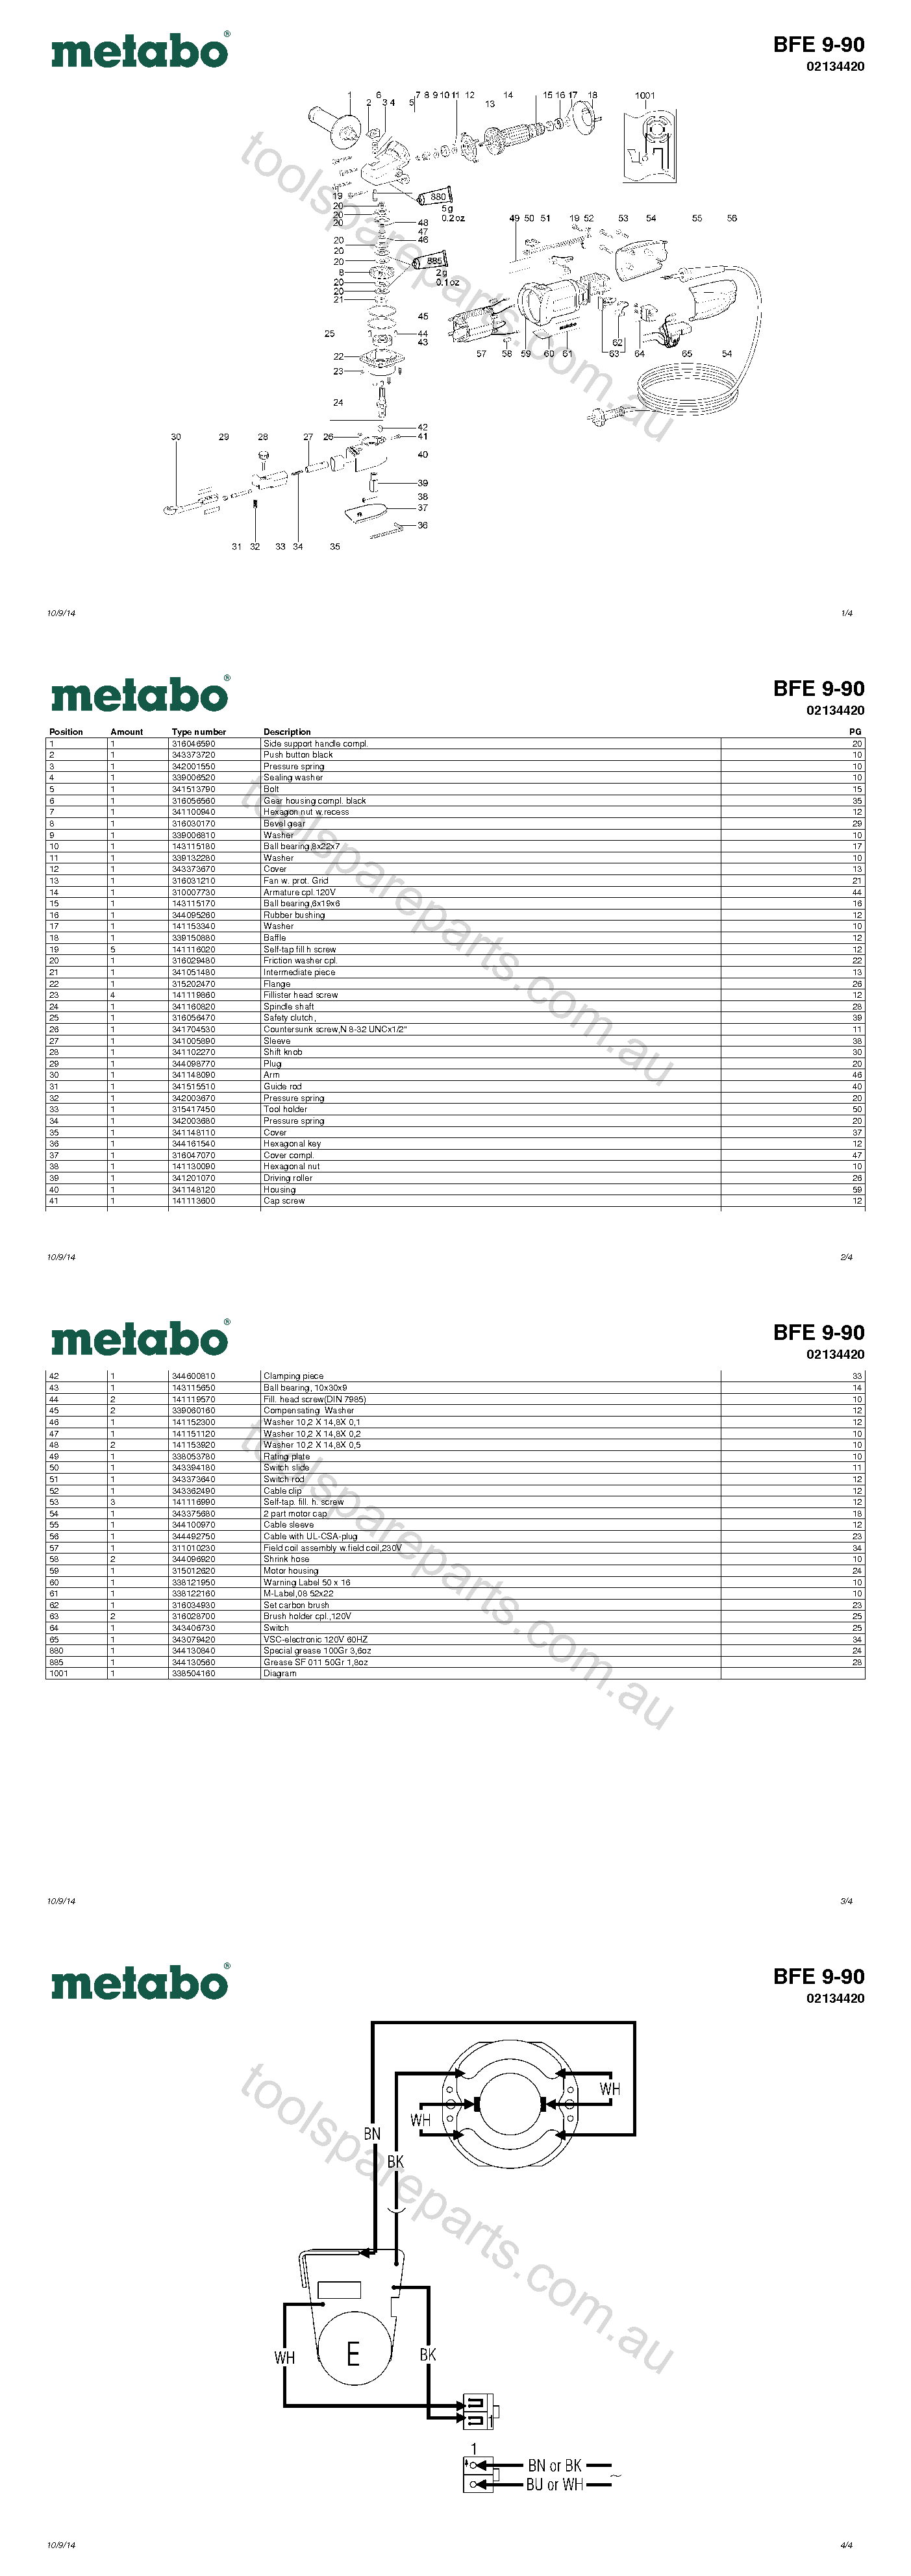 Metabo BFE 9-90 02134420  Diagram 1